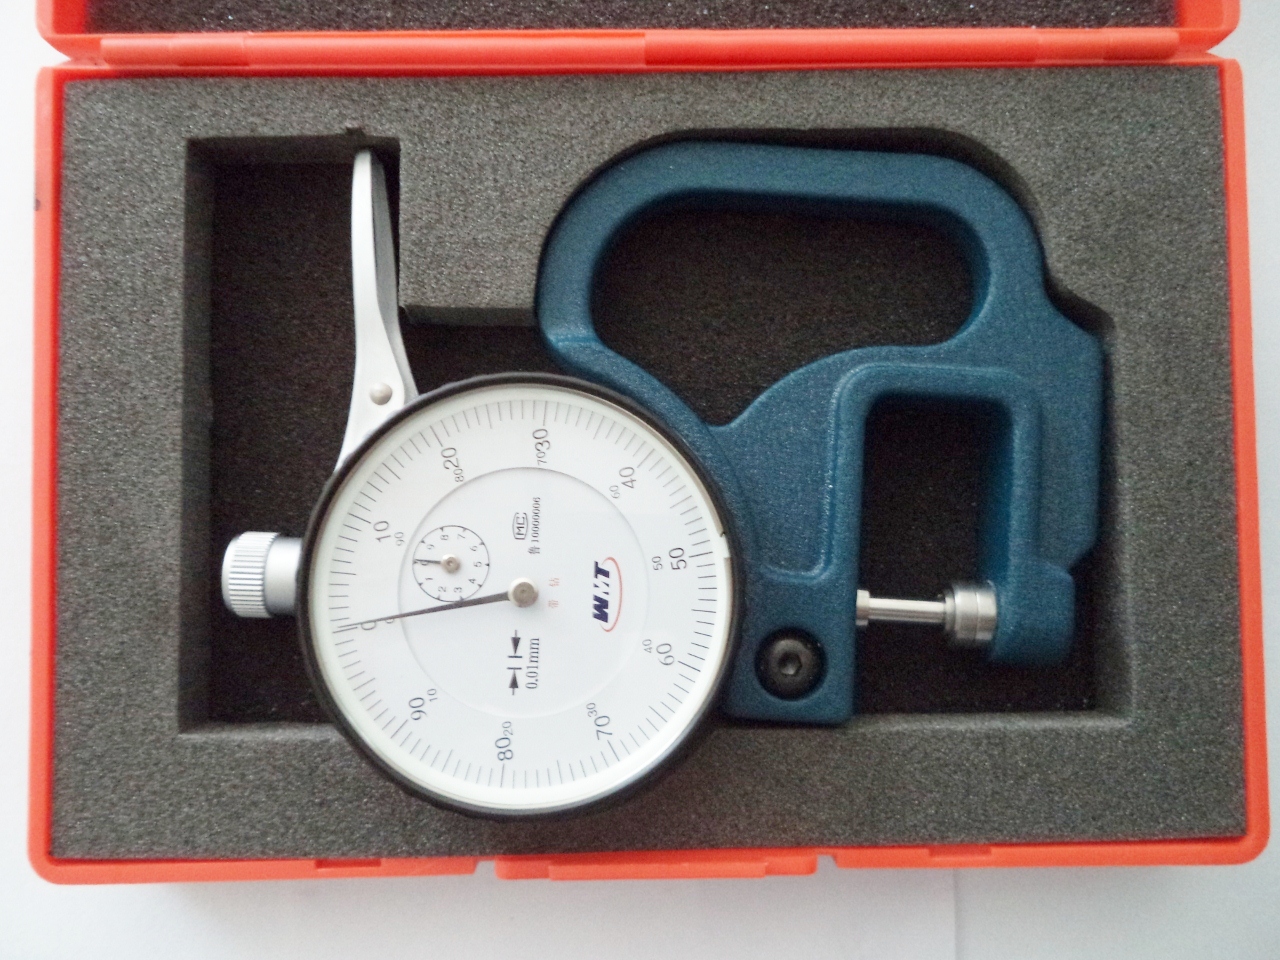 Measuring instrument - thickne